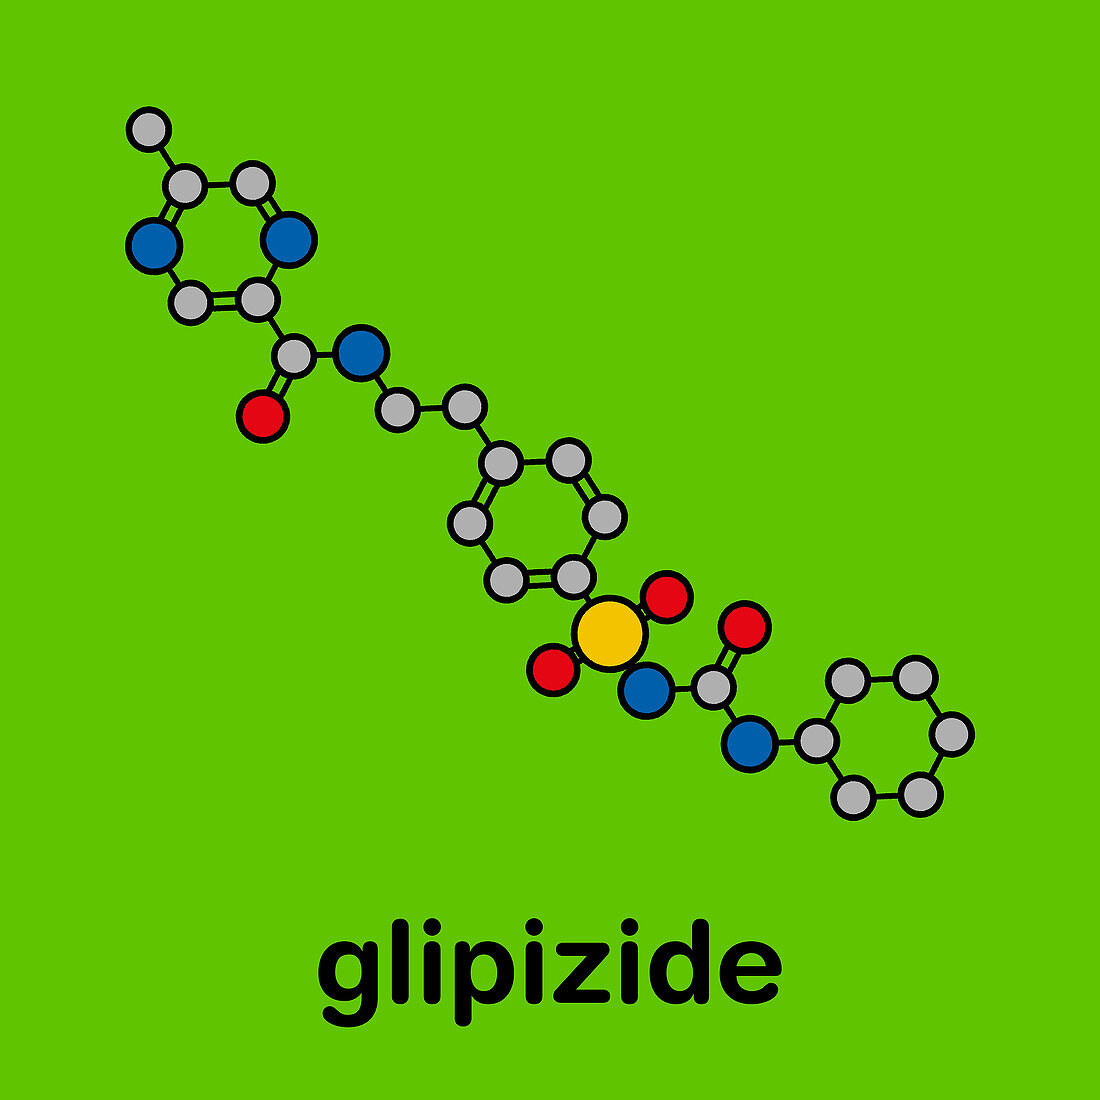 Glipizide diabetes drug molecule, illustration